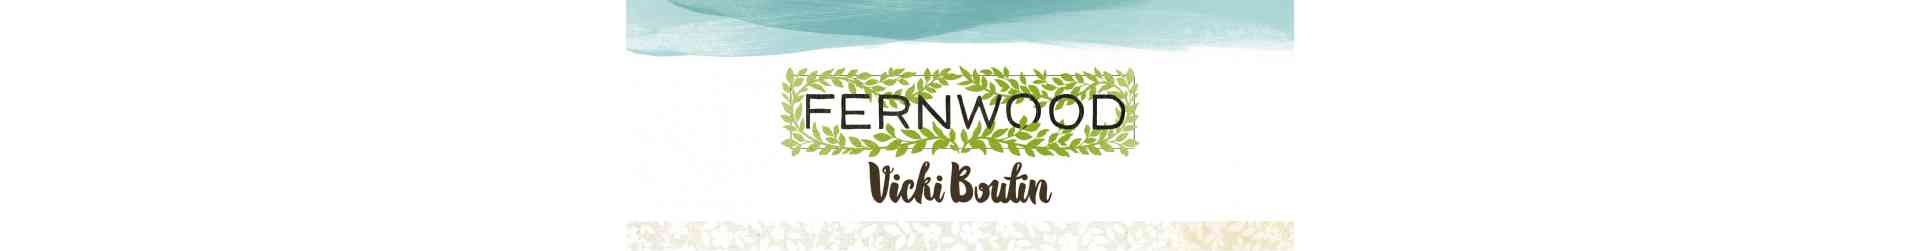 Fernwood - Vicki Boutin